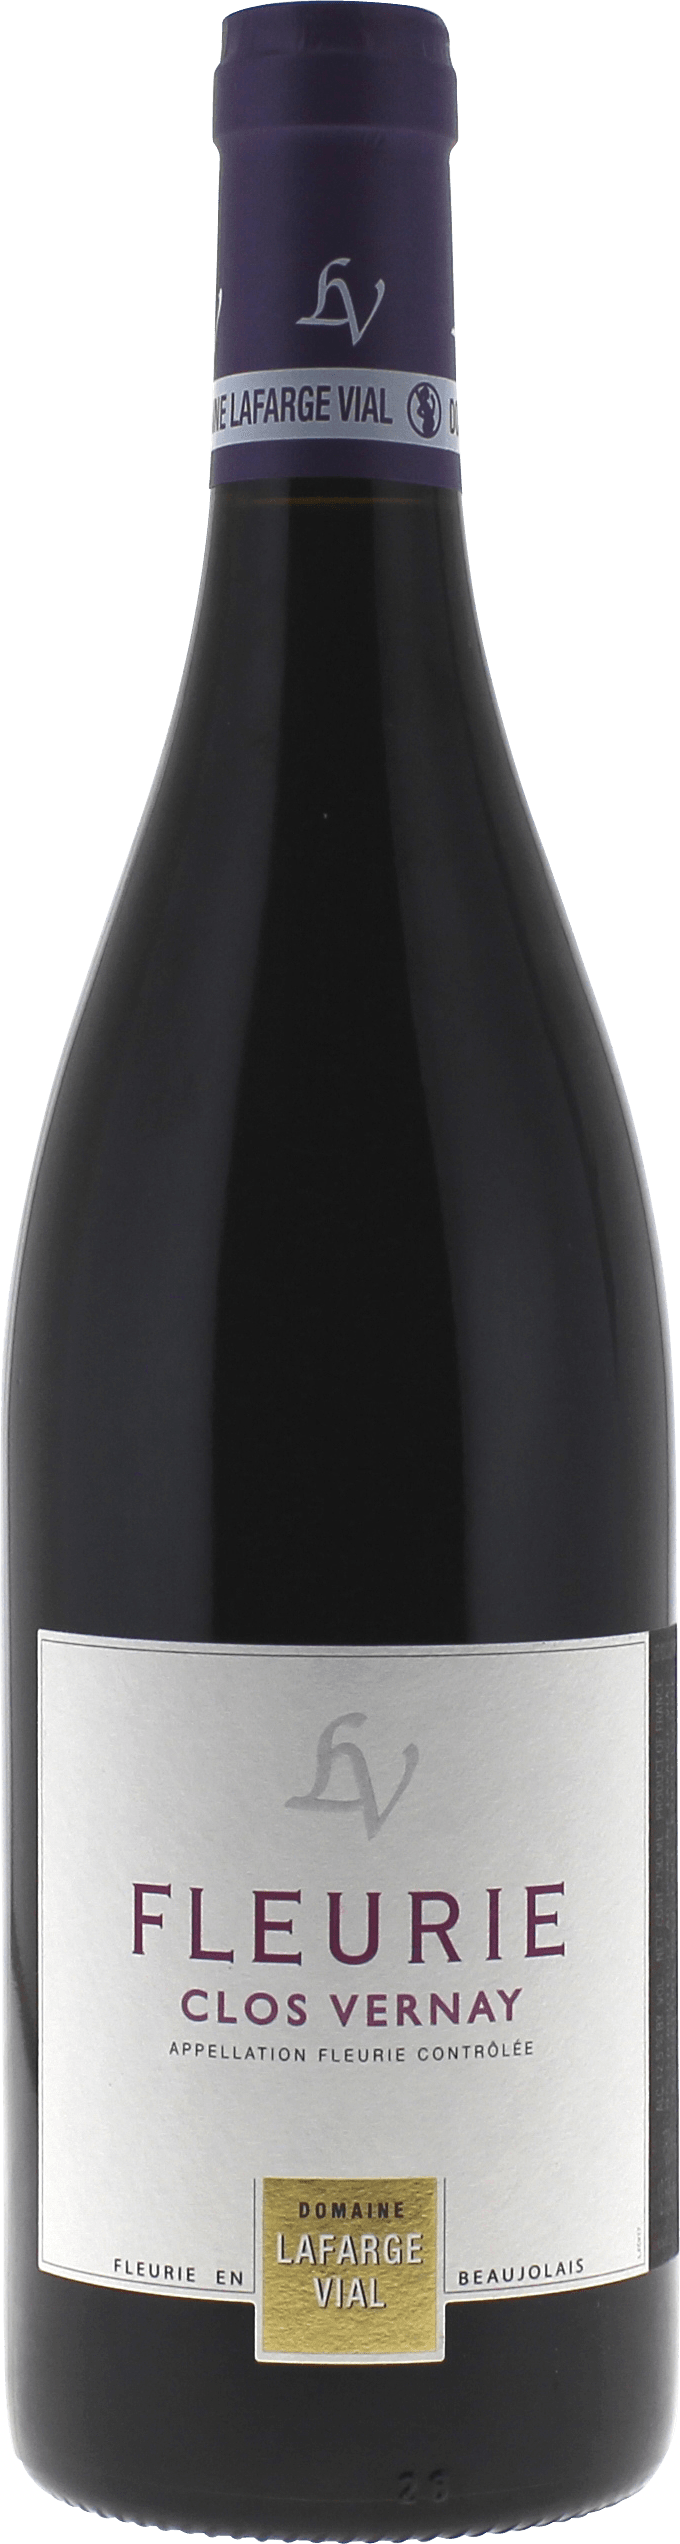 Fleurie clos vernay 2021  LAFARGE-VIAL, Bourgogne rouge